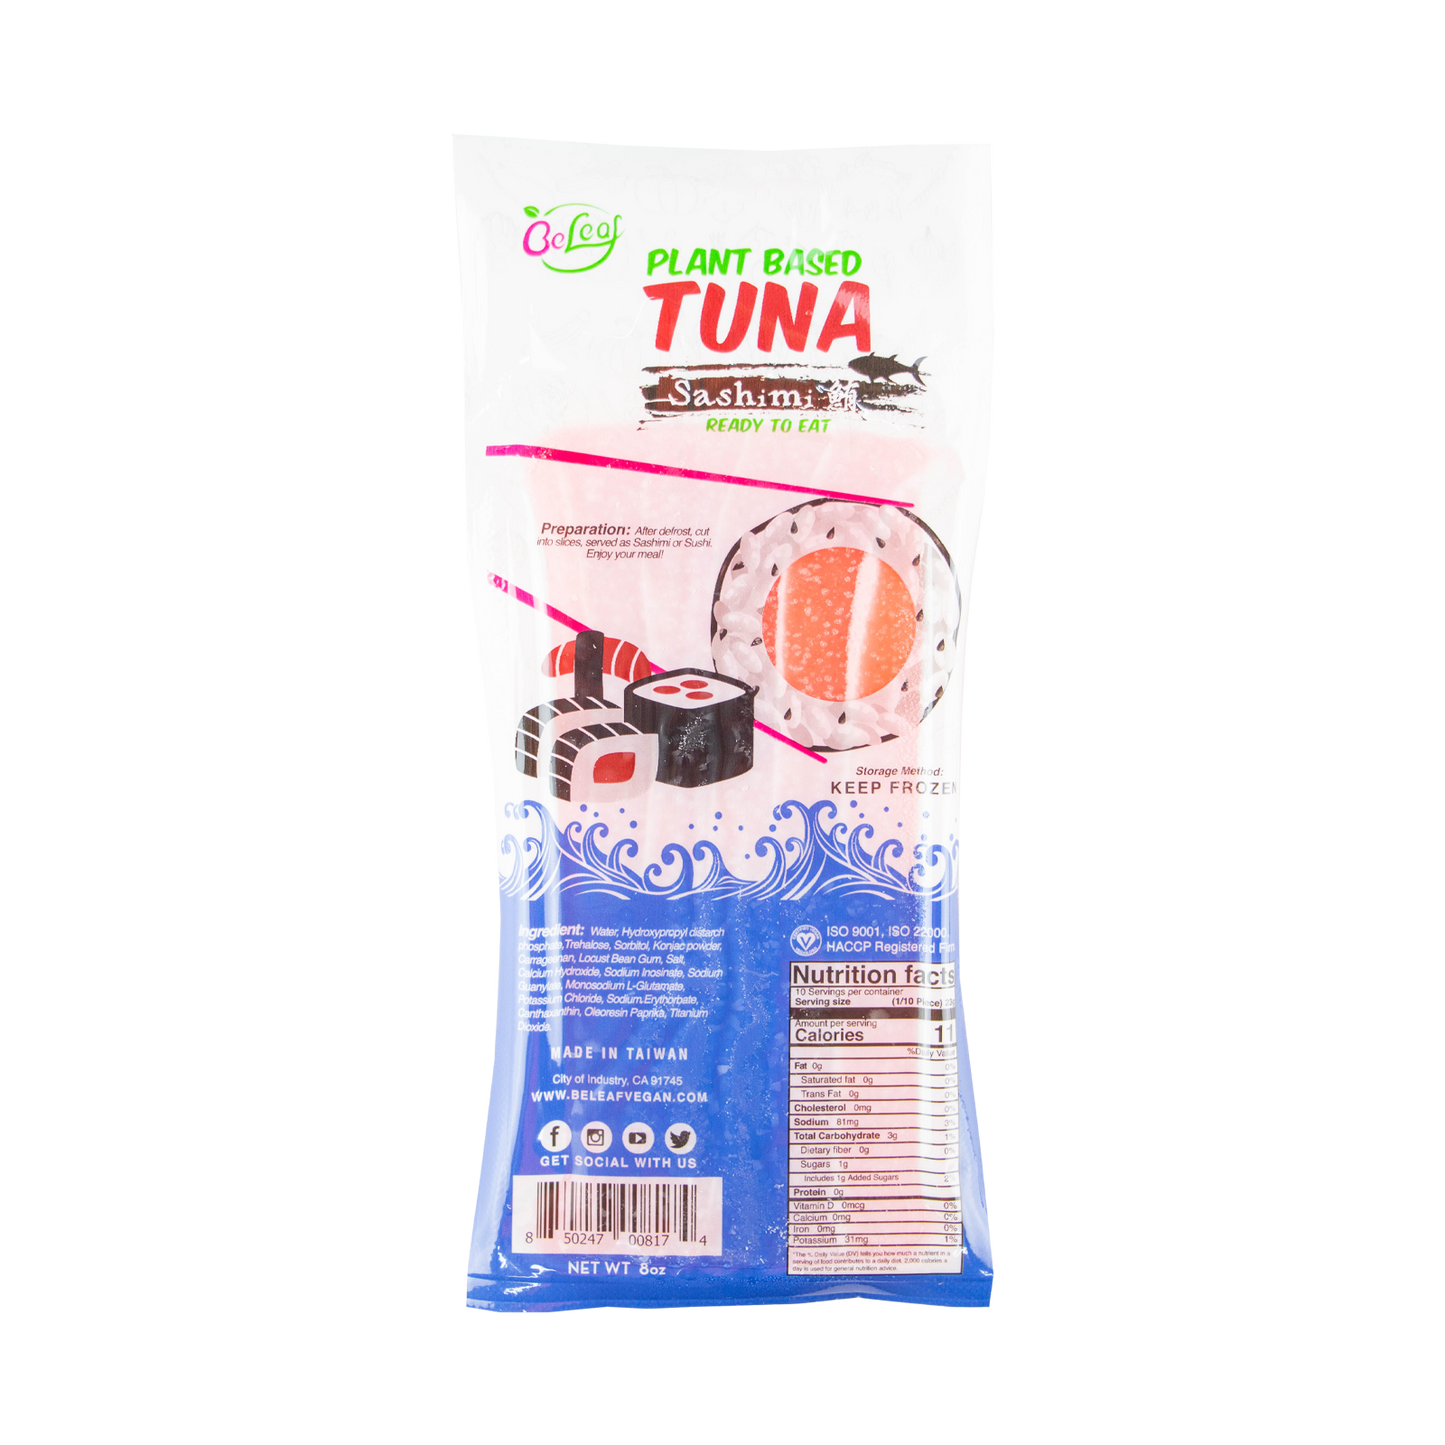 Be Leaf - Plant Based Sashimi Tuna - 8 oz (Store Pick-Up Only)